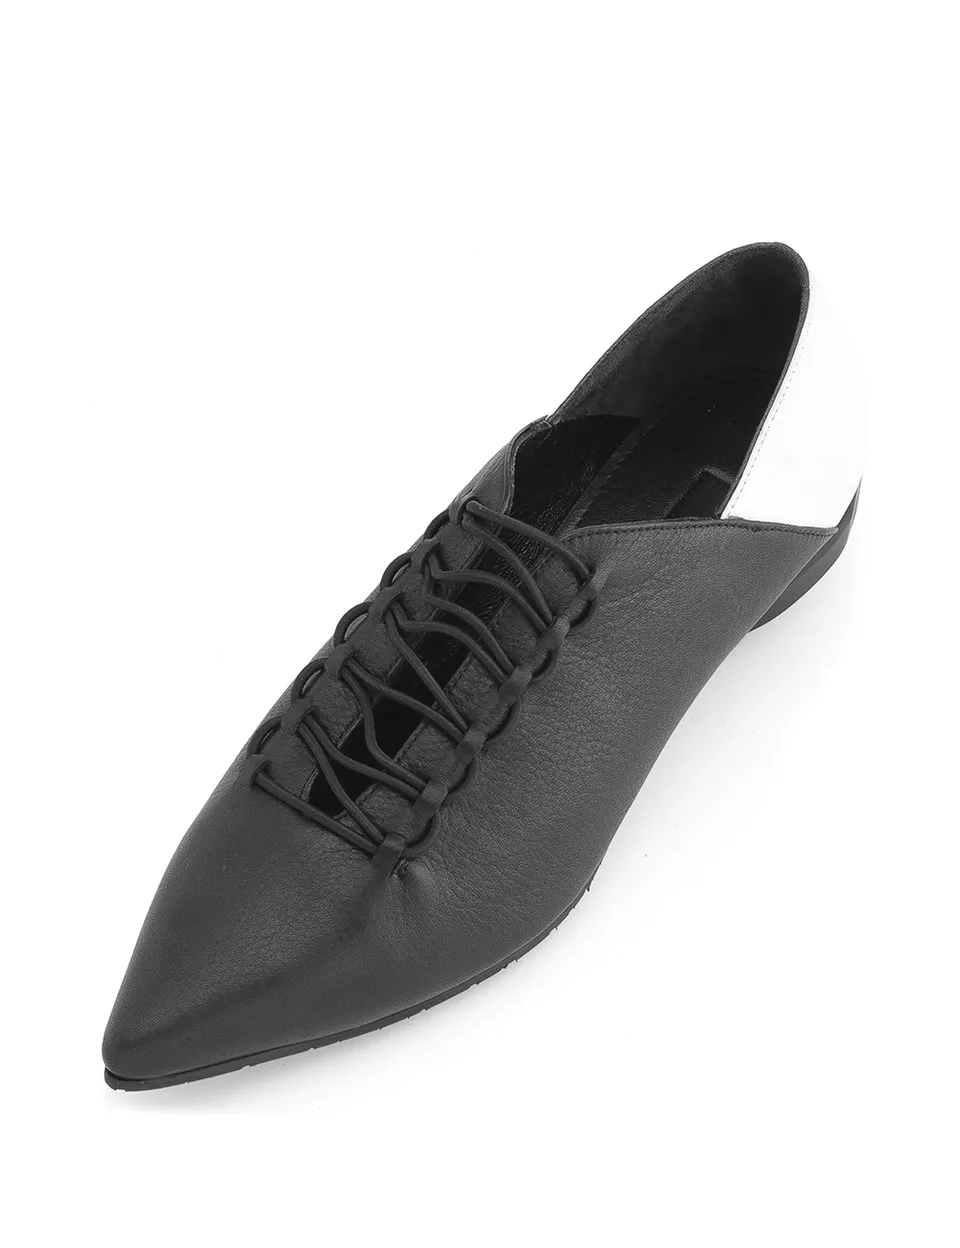 

ILVi-Genuine Leather Handmade Wella Women's Moccasin Black Matte-White Women Shoes 2020 Spring Summer (Made in turkey)